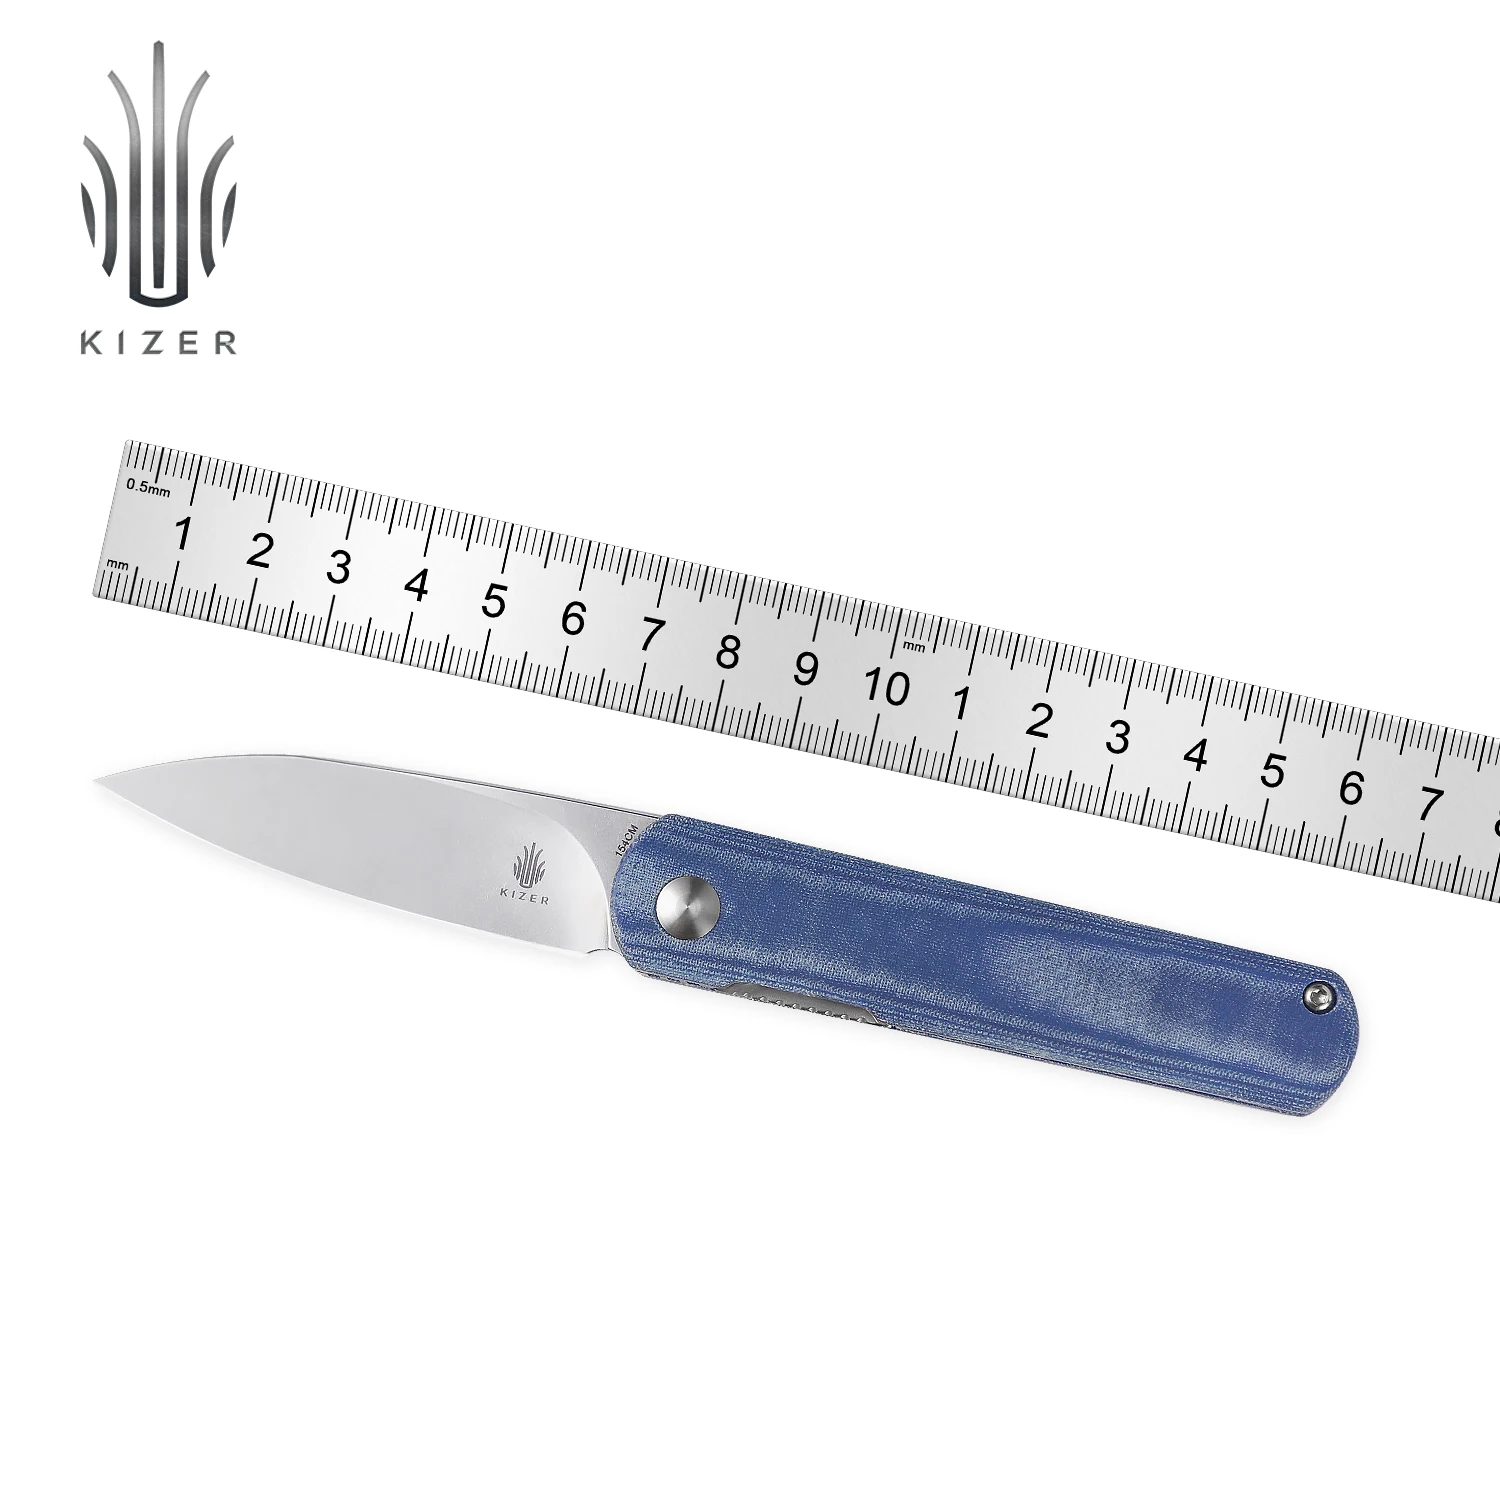 Kizer Folding Knife Feist V3499C1 2021 New Blue Denim Micarta Handle EDC Pocket Knives with 154CM Blade